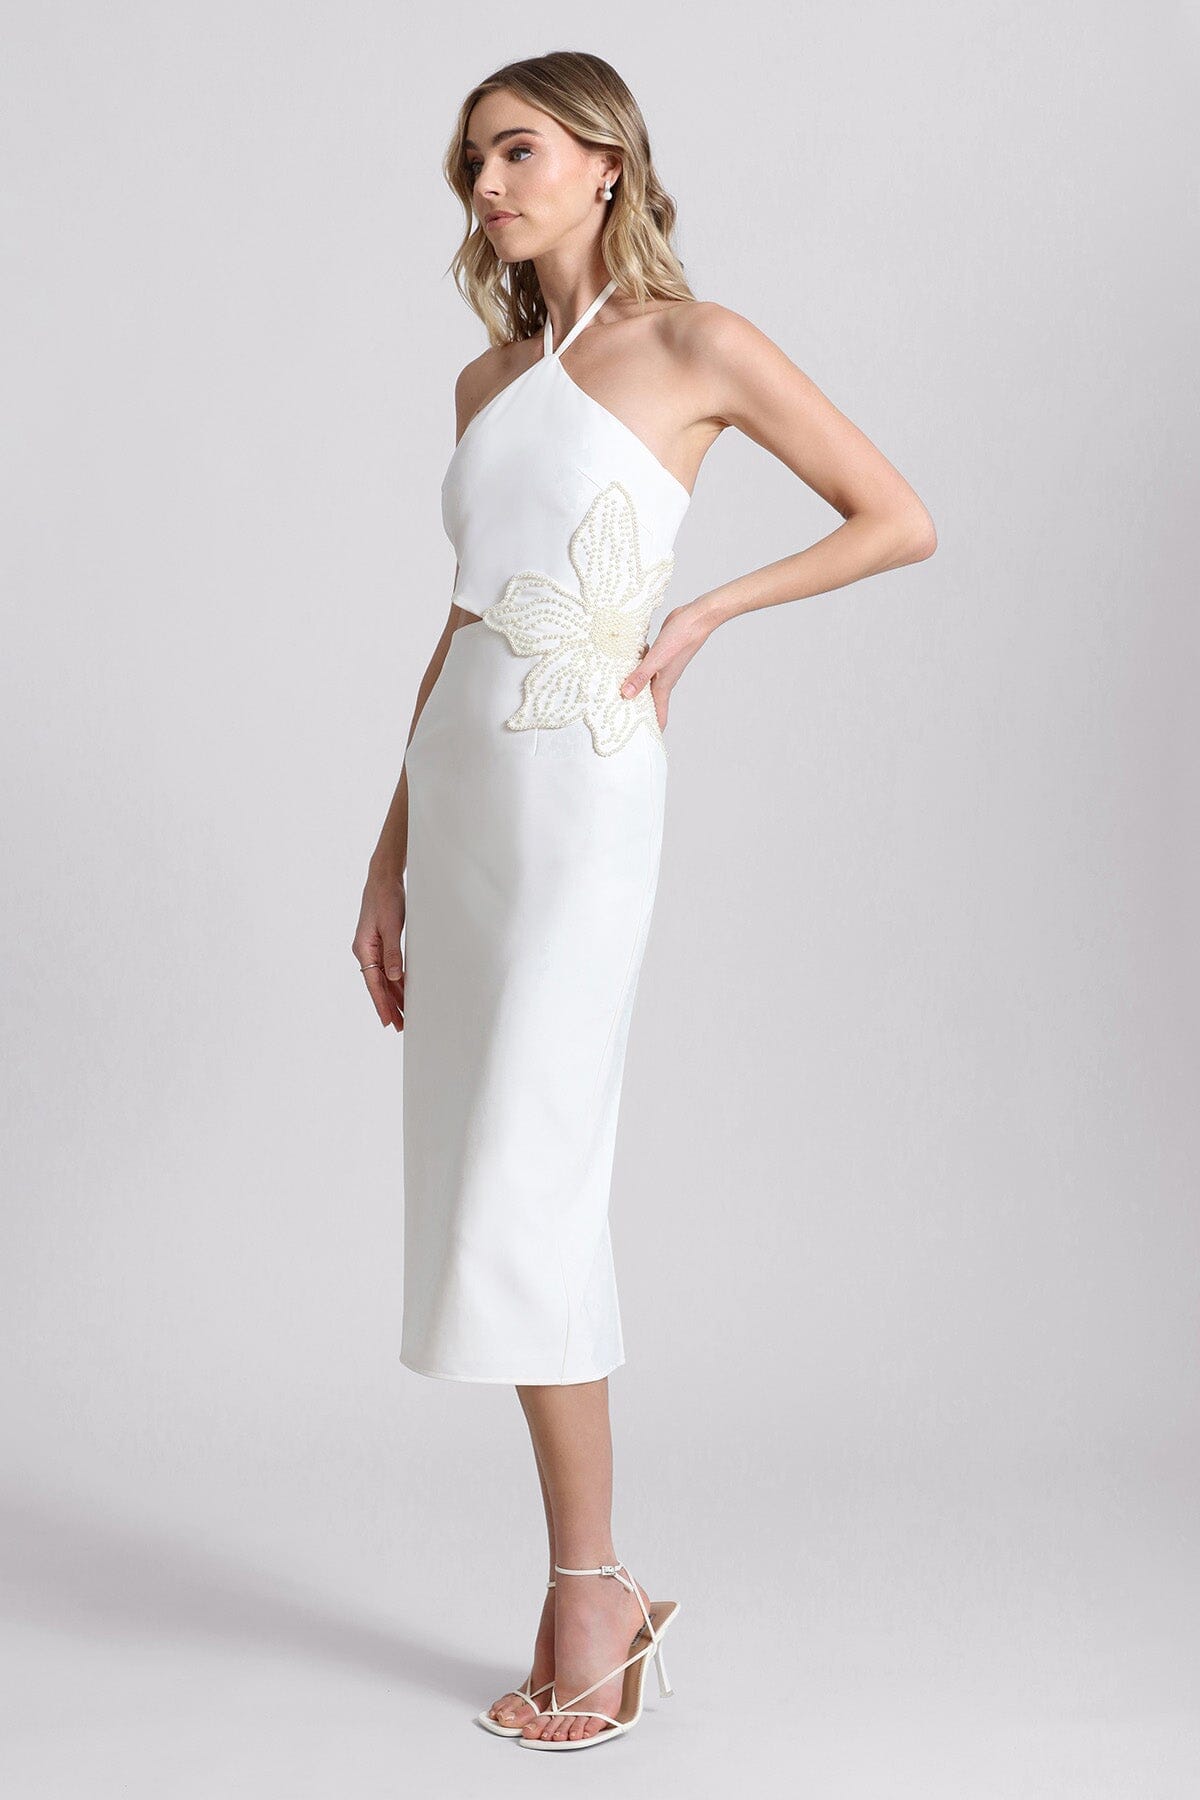 all white flower pearl embellished cut-out halter dress - cute unique designer white dresses by Avec Les Filles